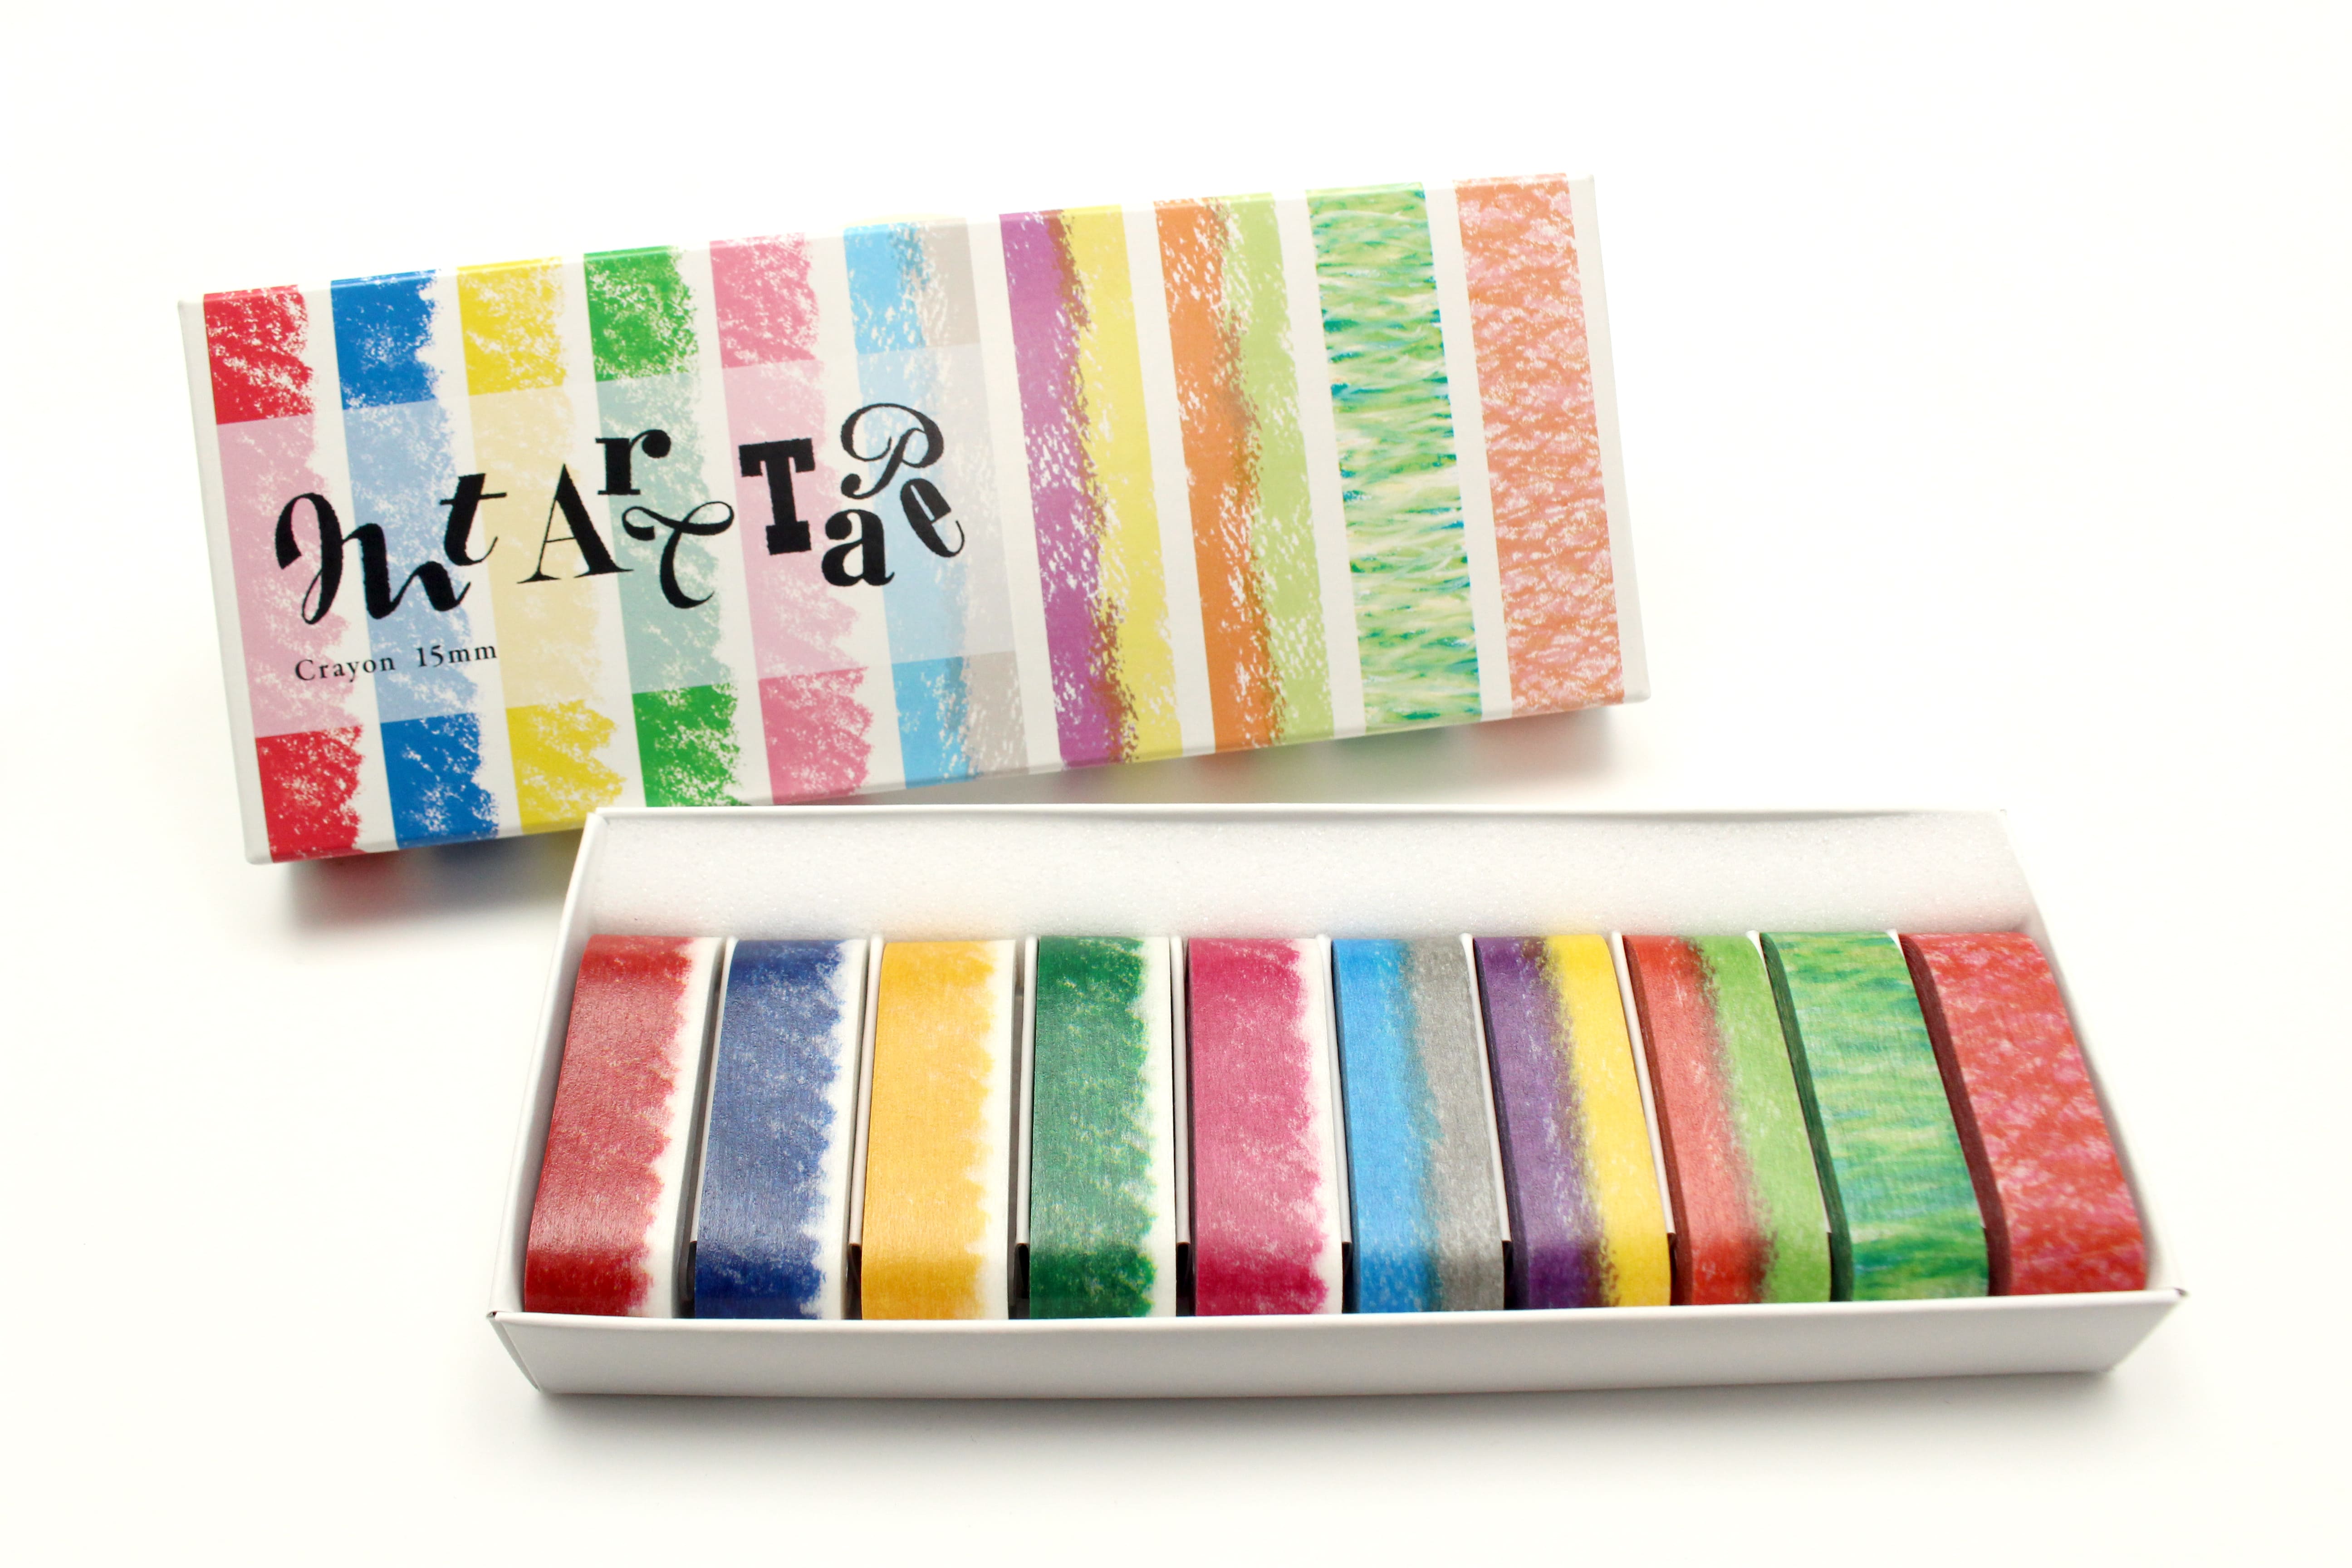 mt fab - Art Tape Crayon - 15mm Washi Tape Set of 10